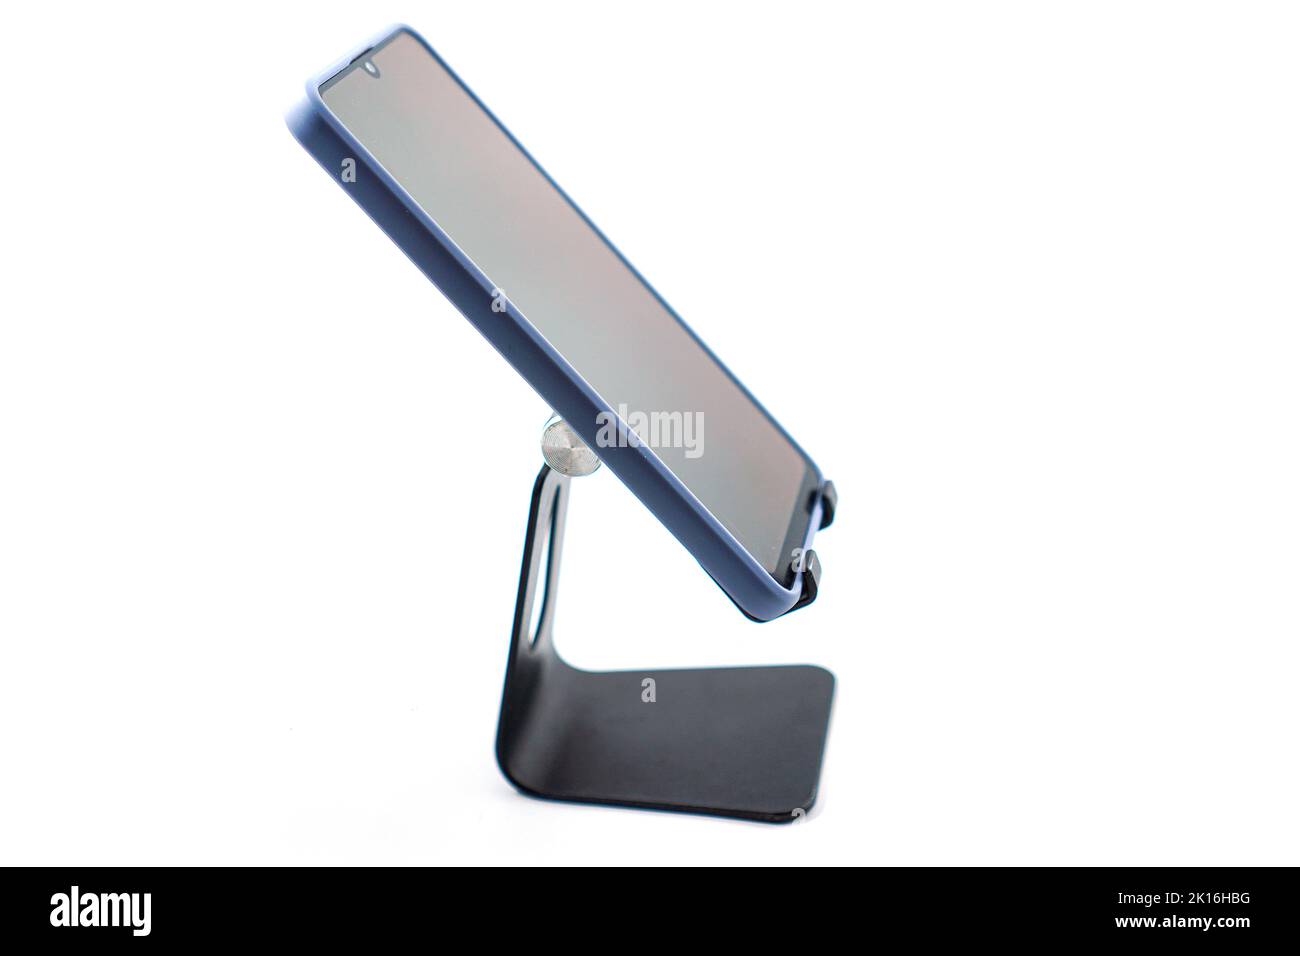 phone holder desk black aluminum metal with smartphone isolated on white background Stock Photo